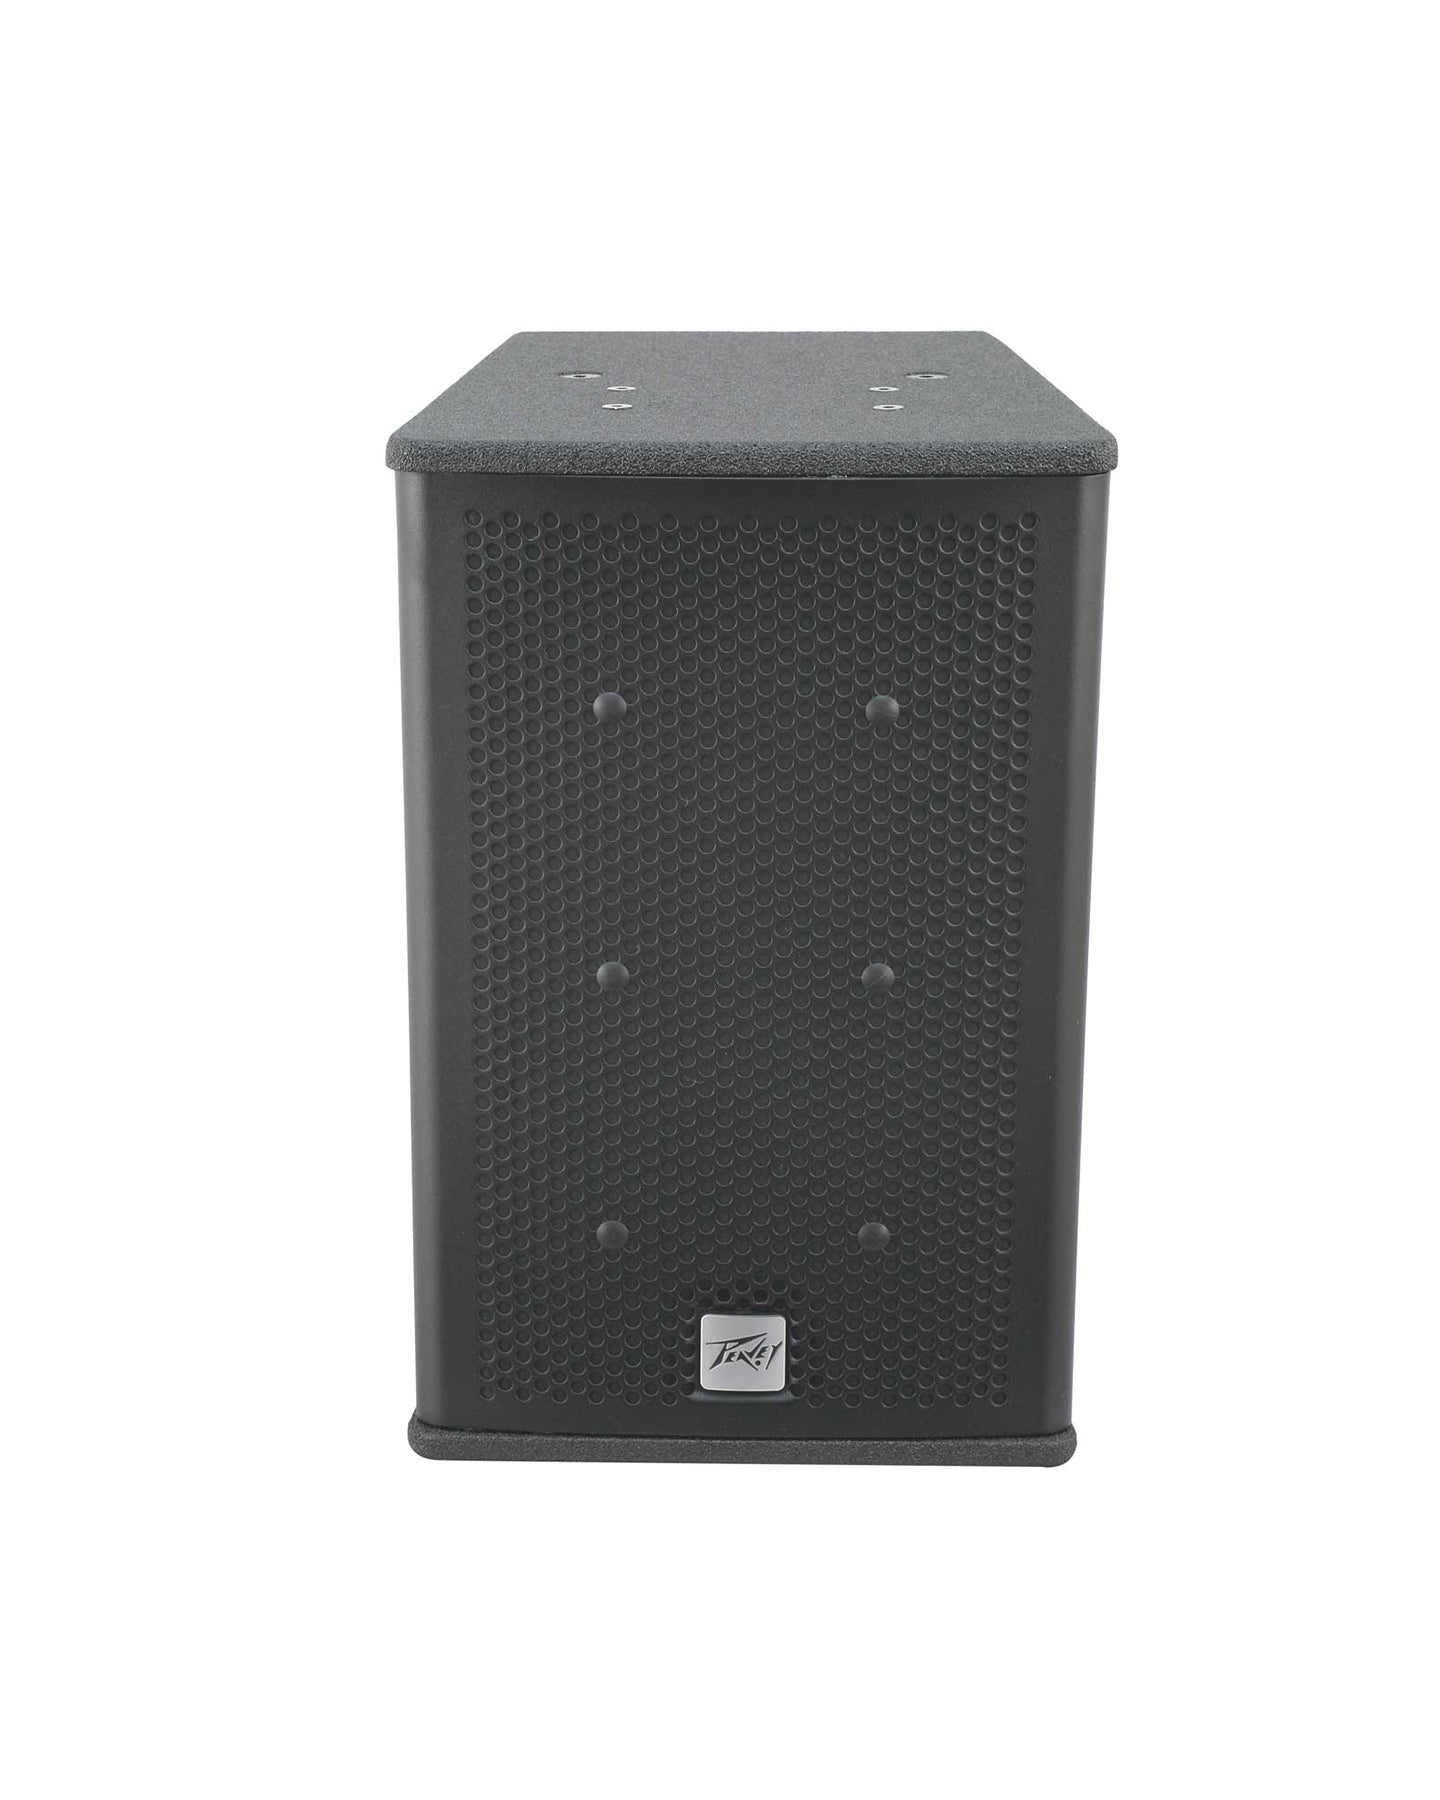 Clearance ELEMENTS 108C 8" Elements Series 2-Way Composite Enclosure Outdoor Speaker